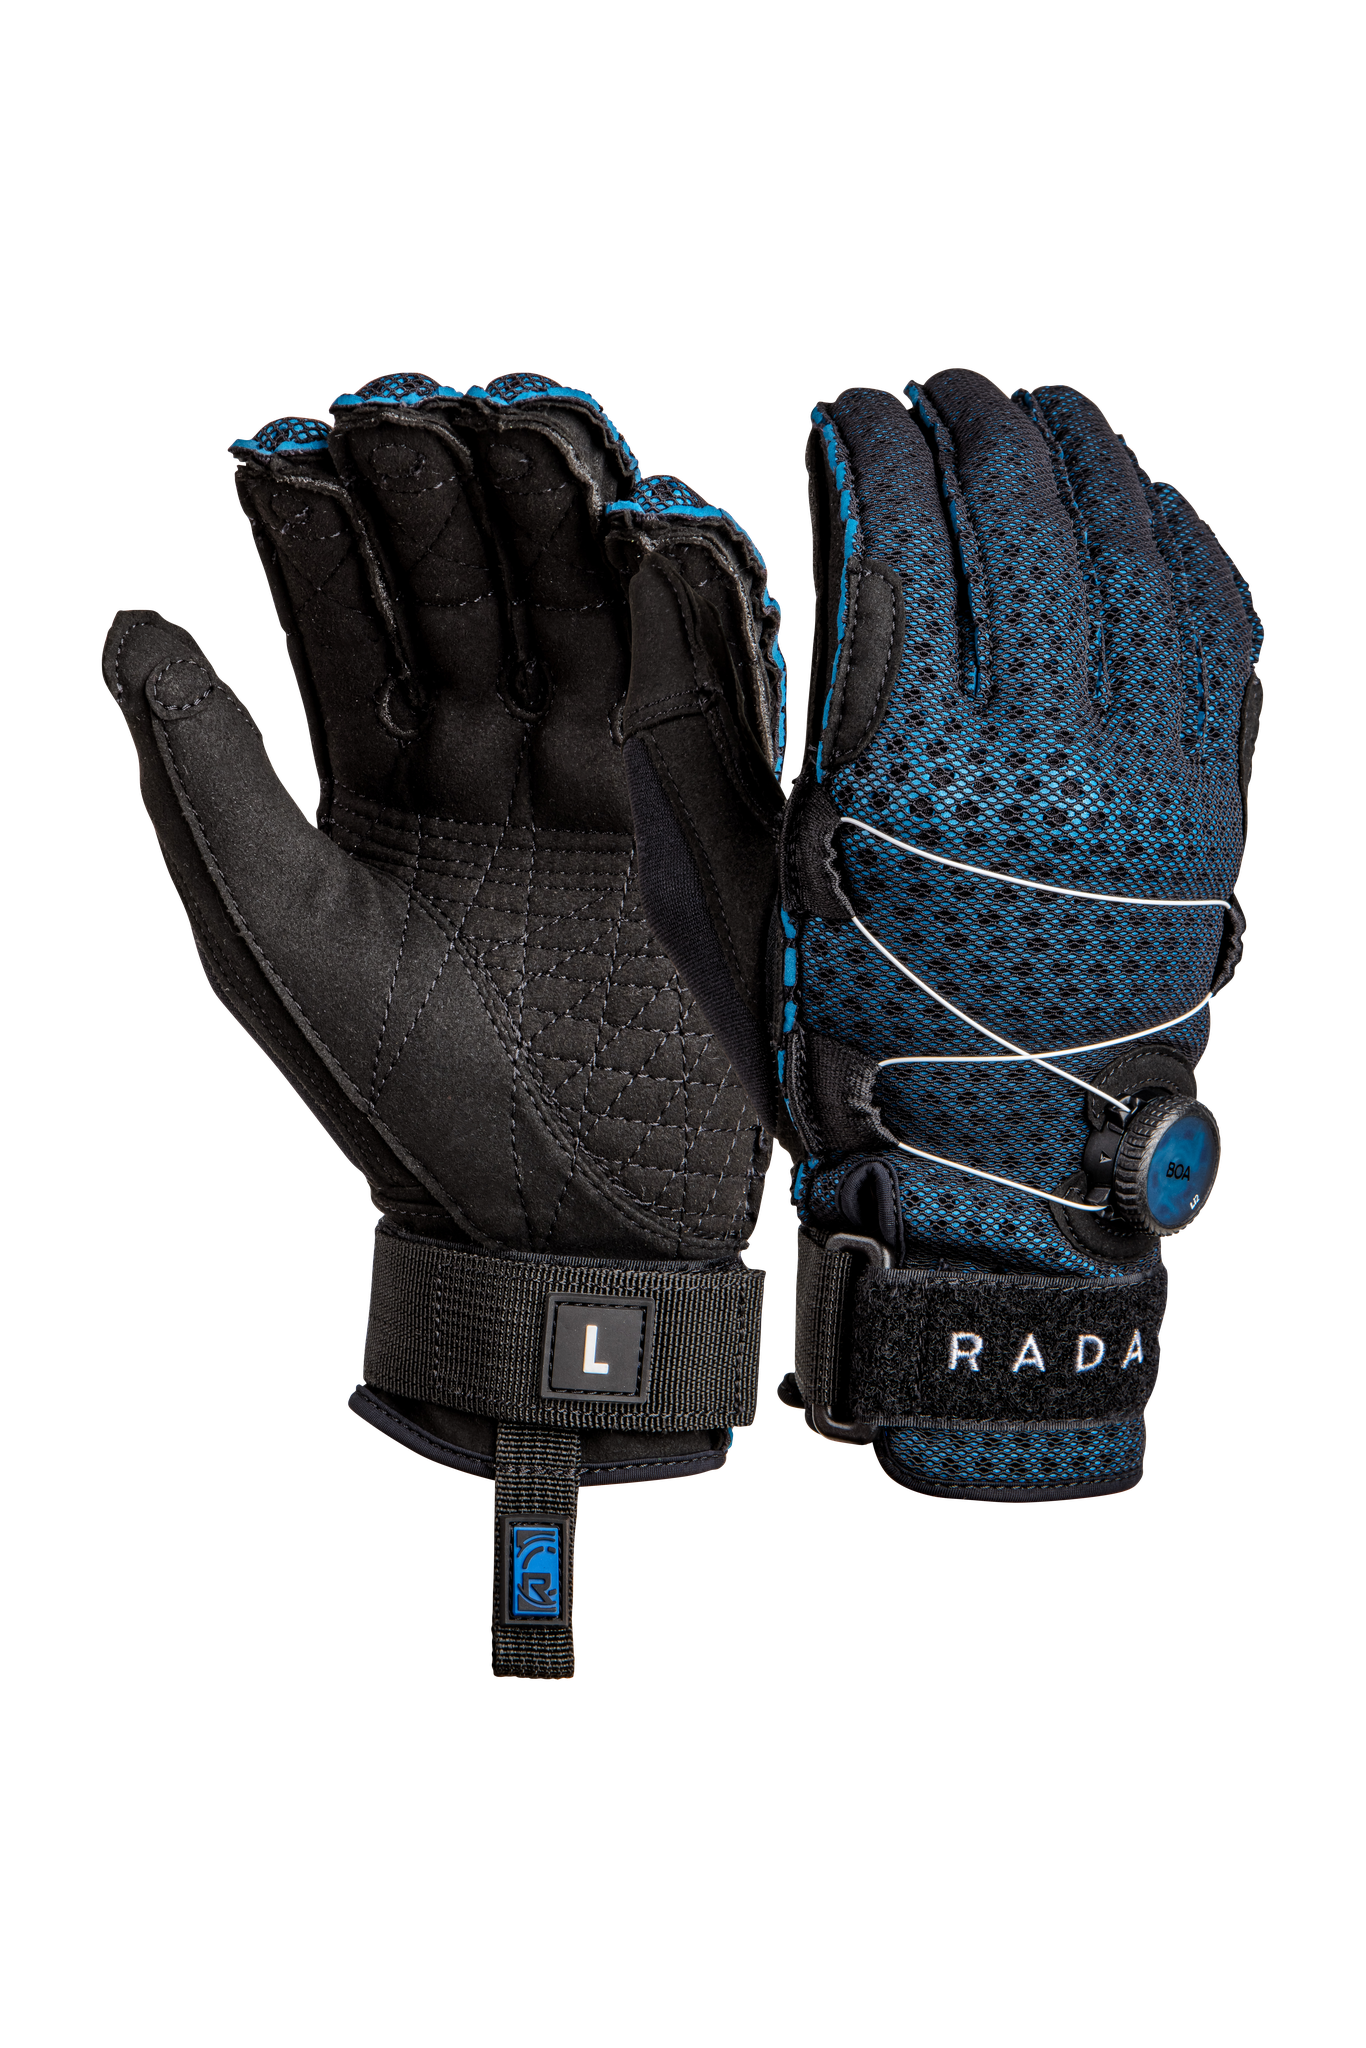 Radar Vapor - A Boa inside-out glove